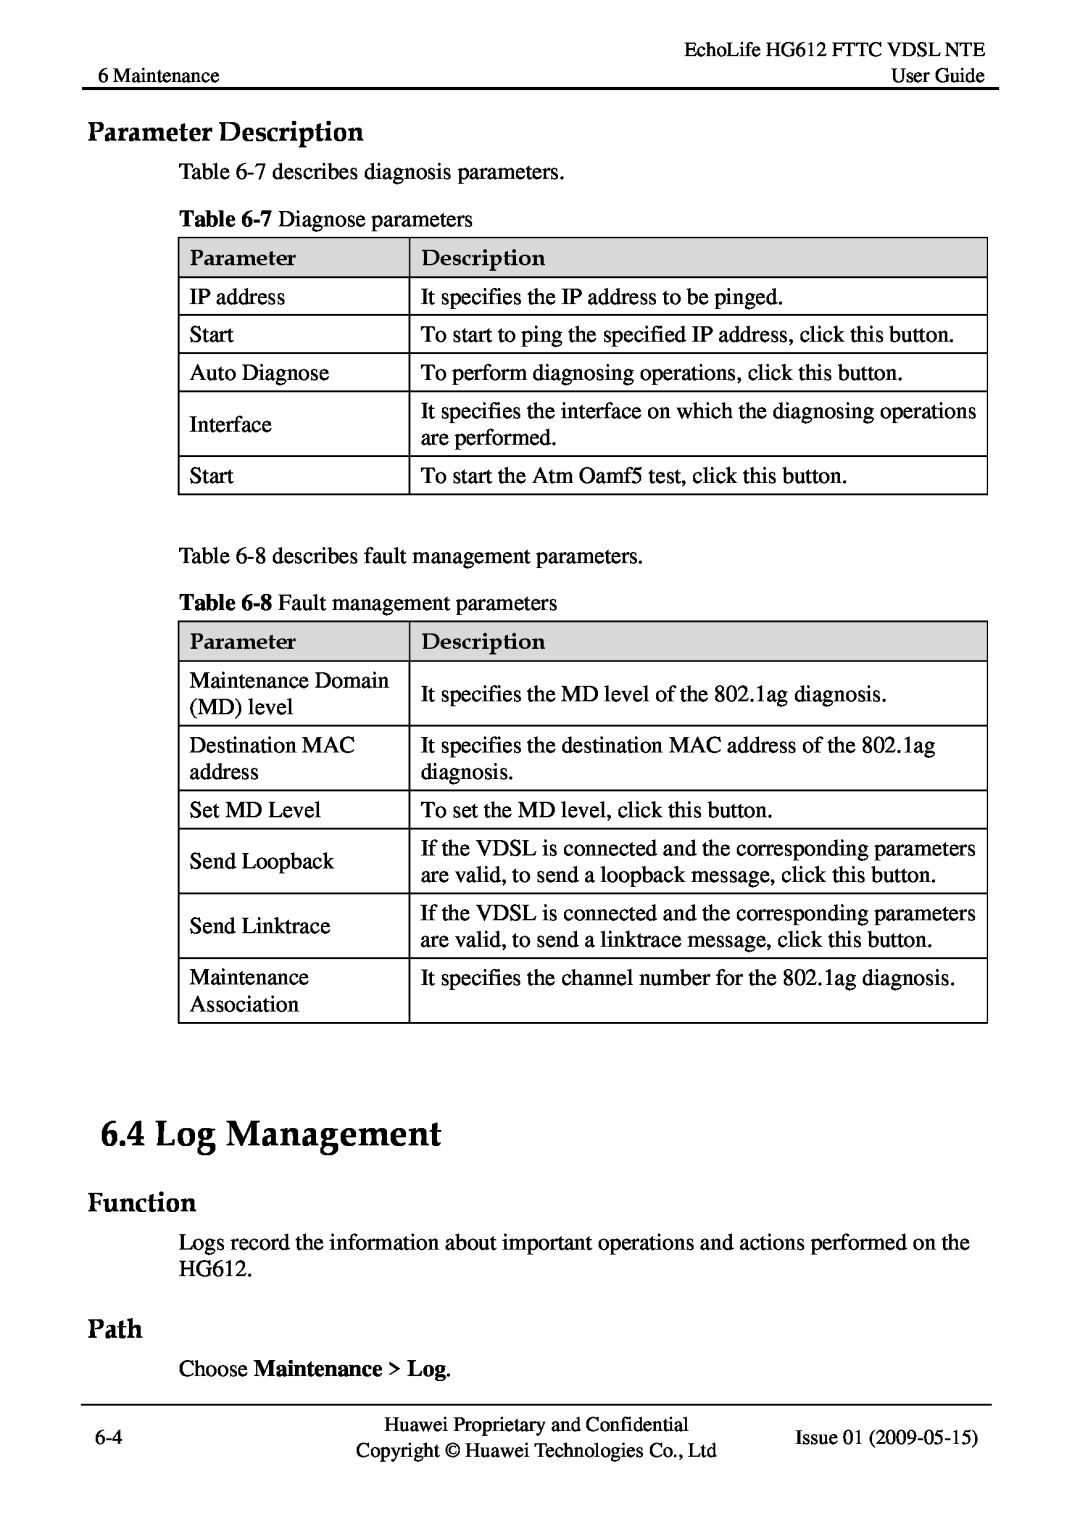 Huawei HG612FTTC VDSL NTE manual Log Management, Parameter Description, Function, Path, Choose Maintenance Log 